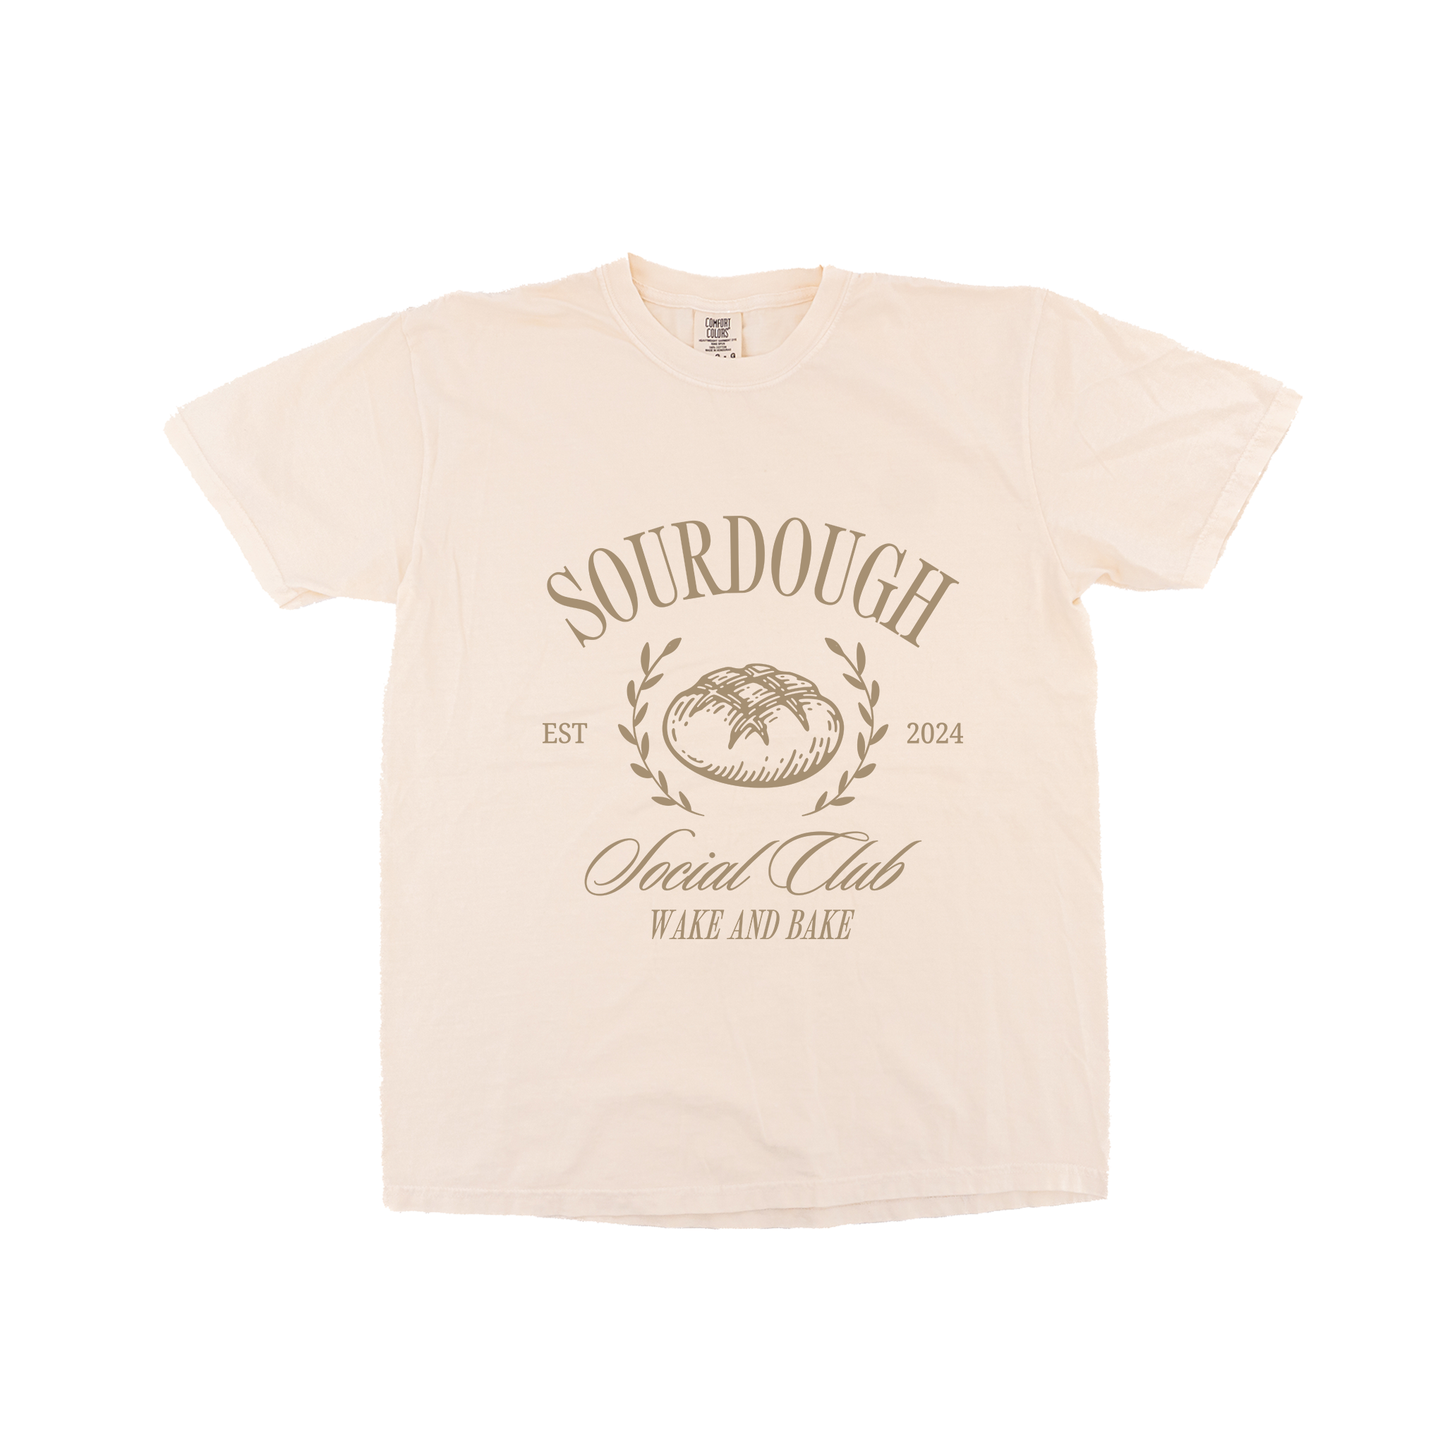 Sourdough Social Club - Tee (Vintage Natural, Short Sleeve)